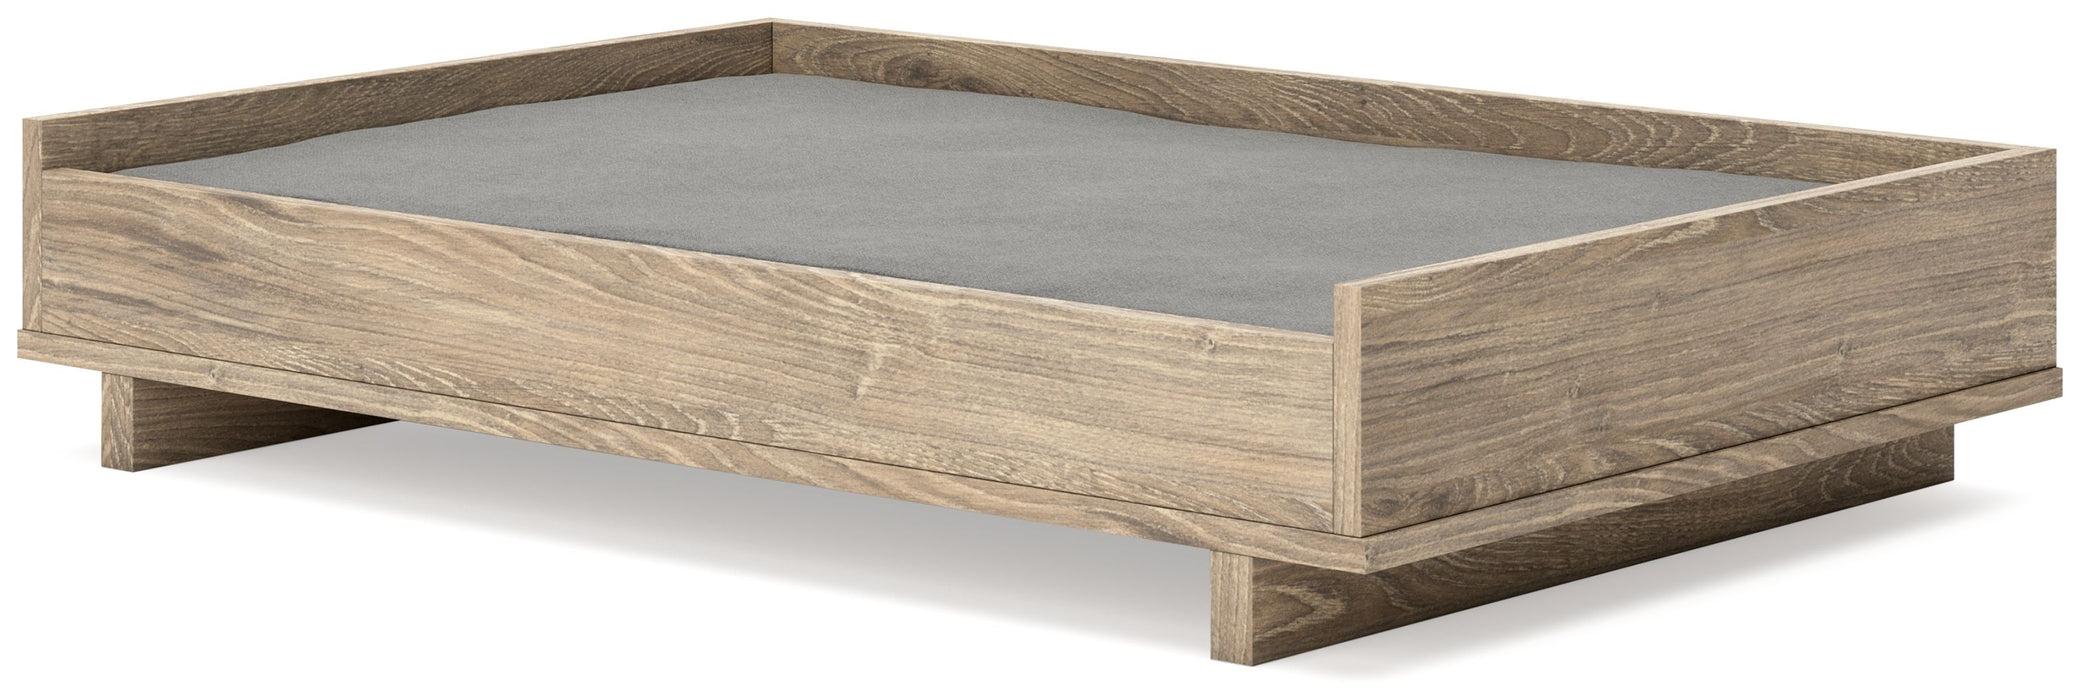 Oliah - Natural - Pet Bed Frame